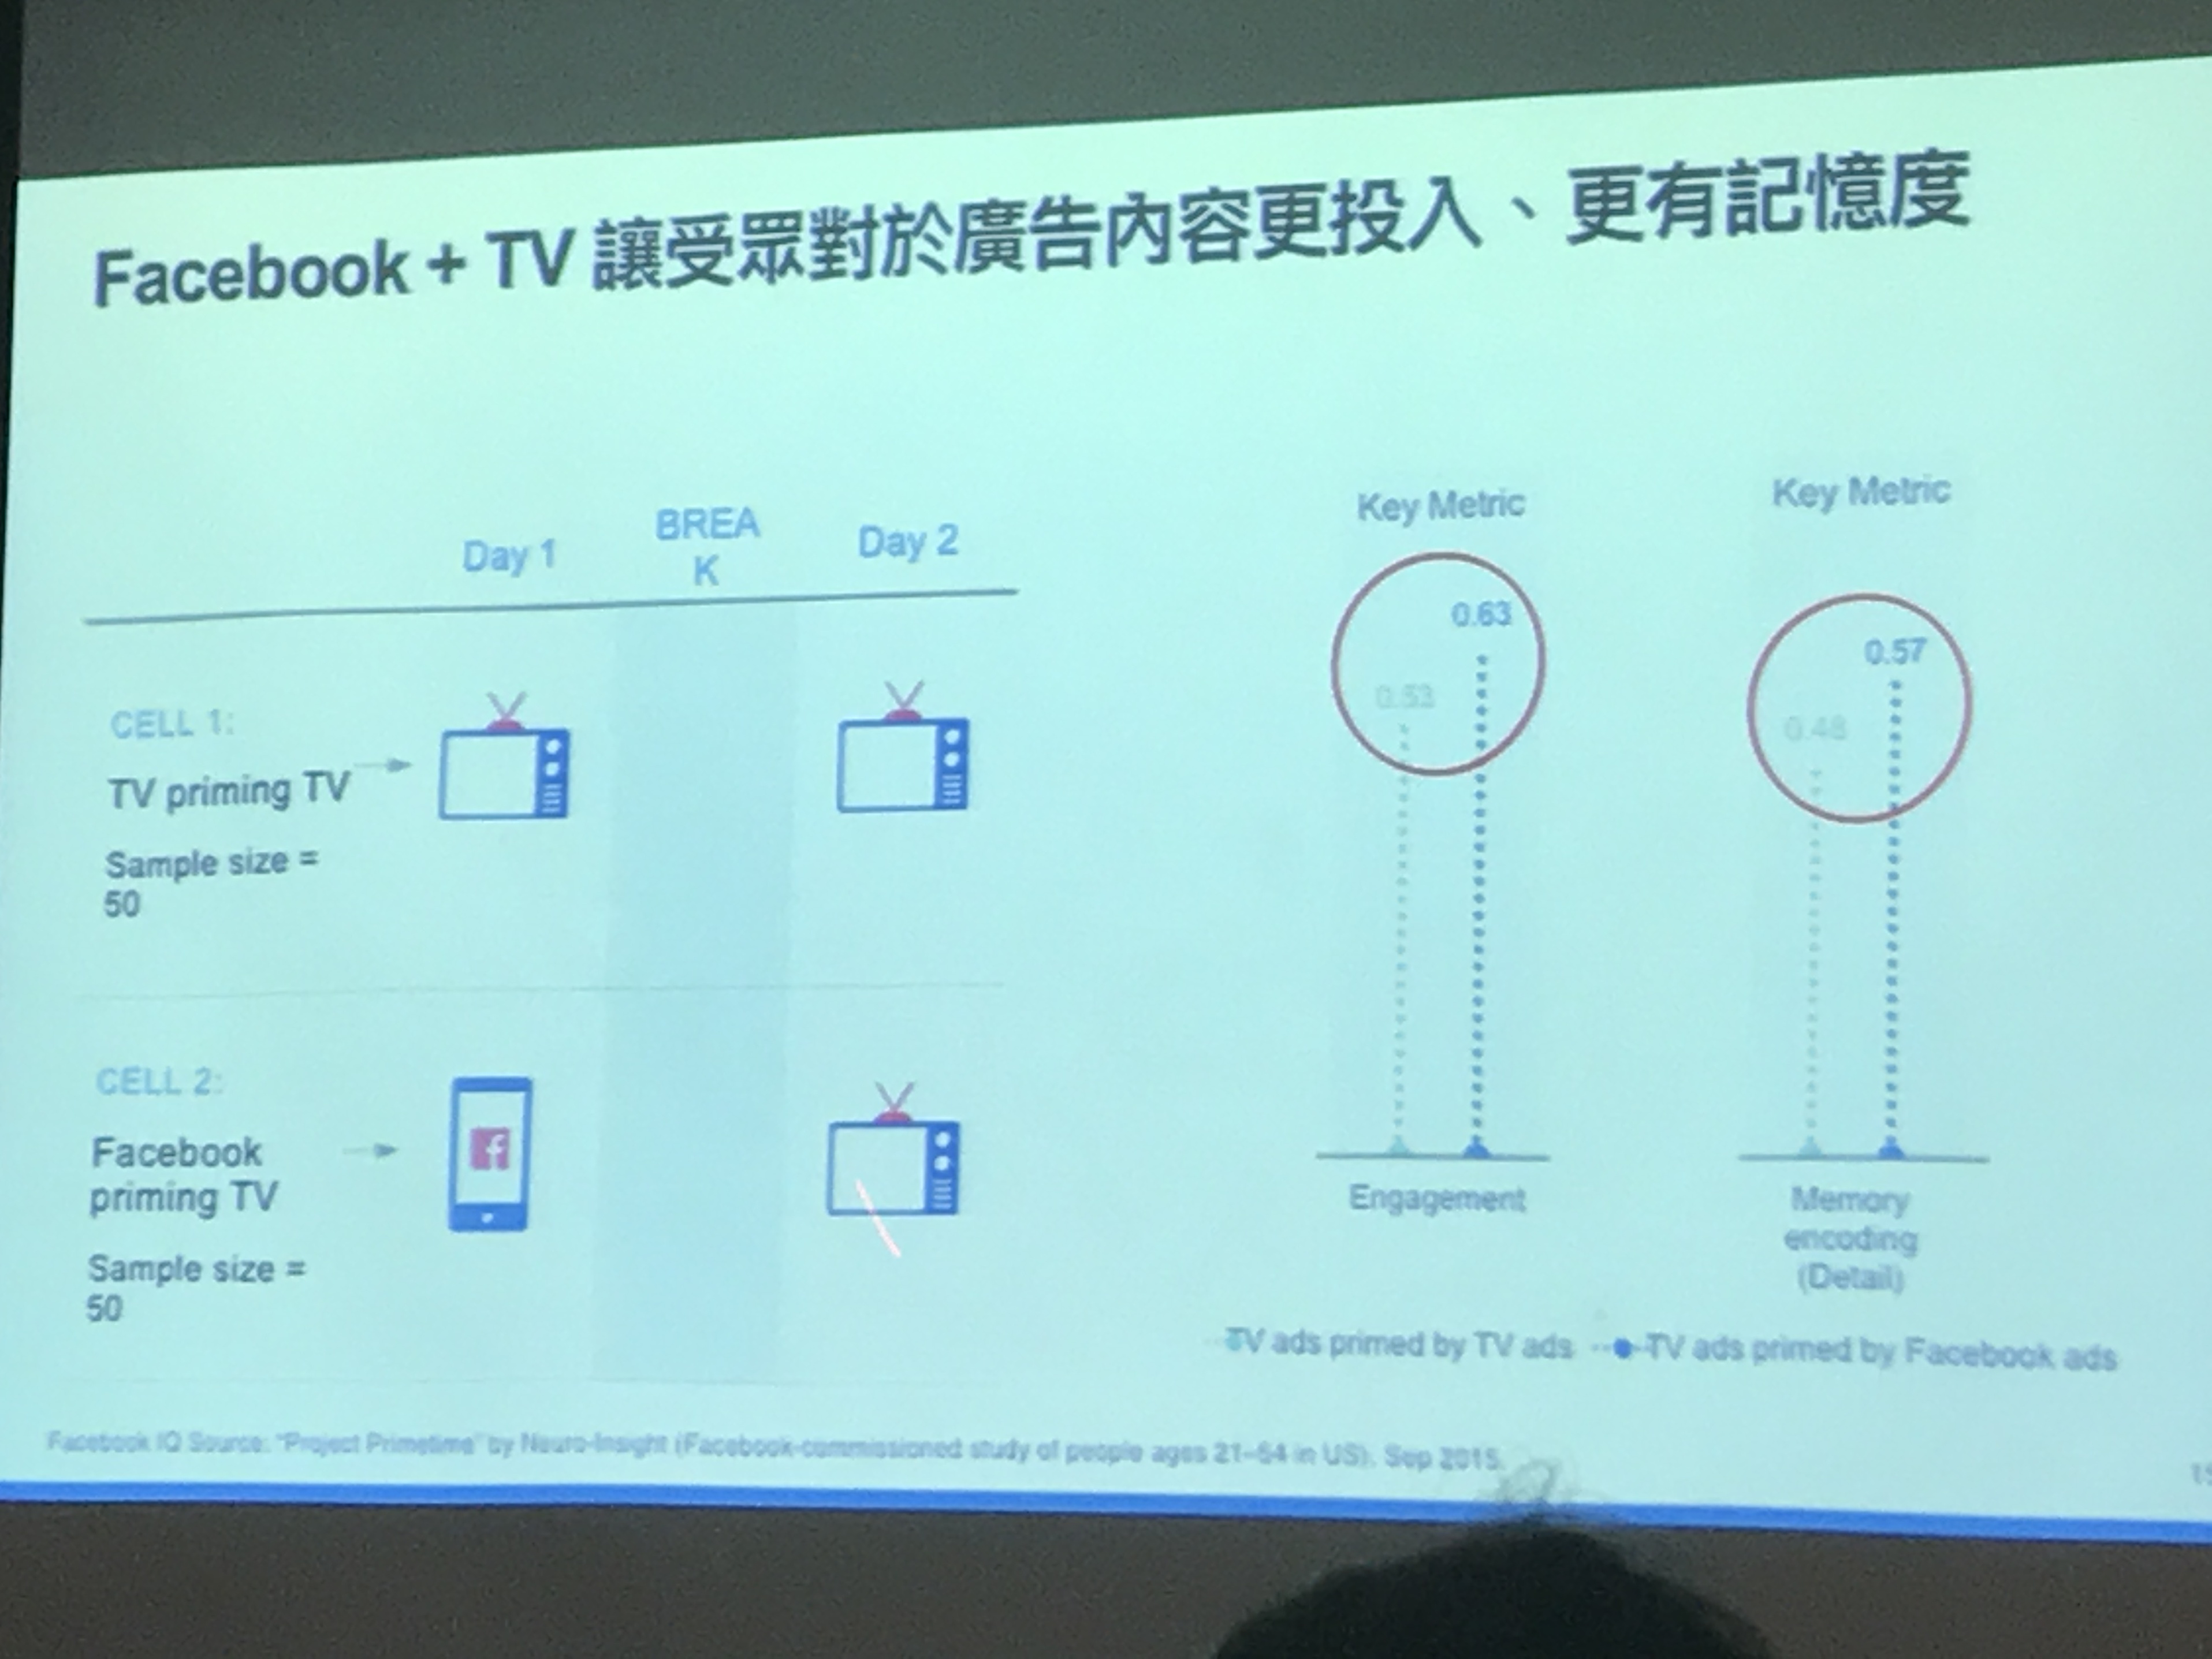 Facebook + TV，３個跨螢策略增加廣告記憶點